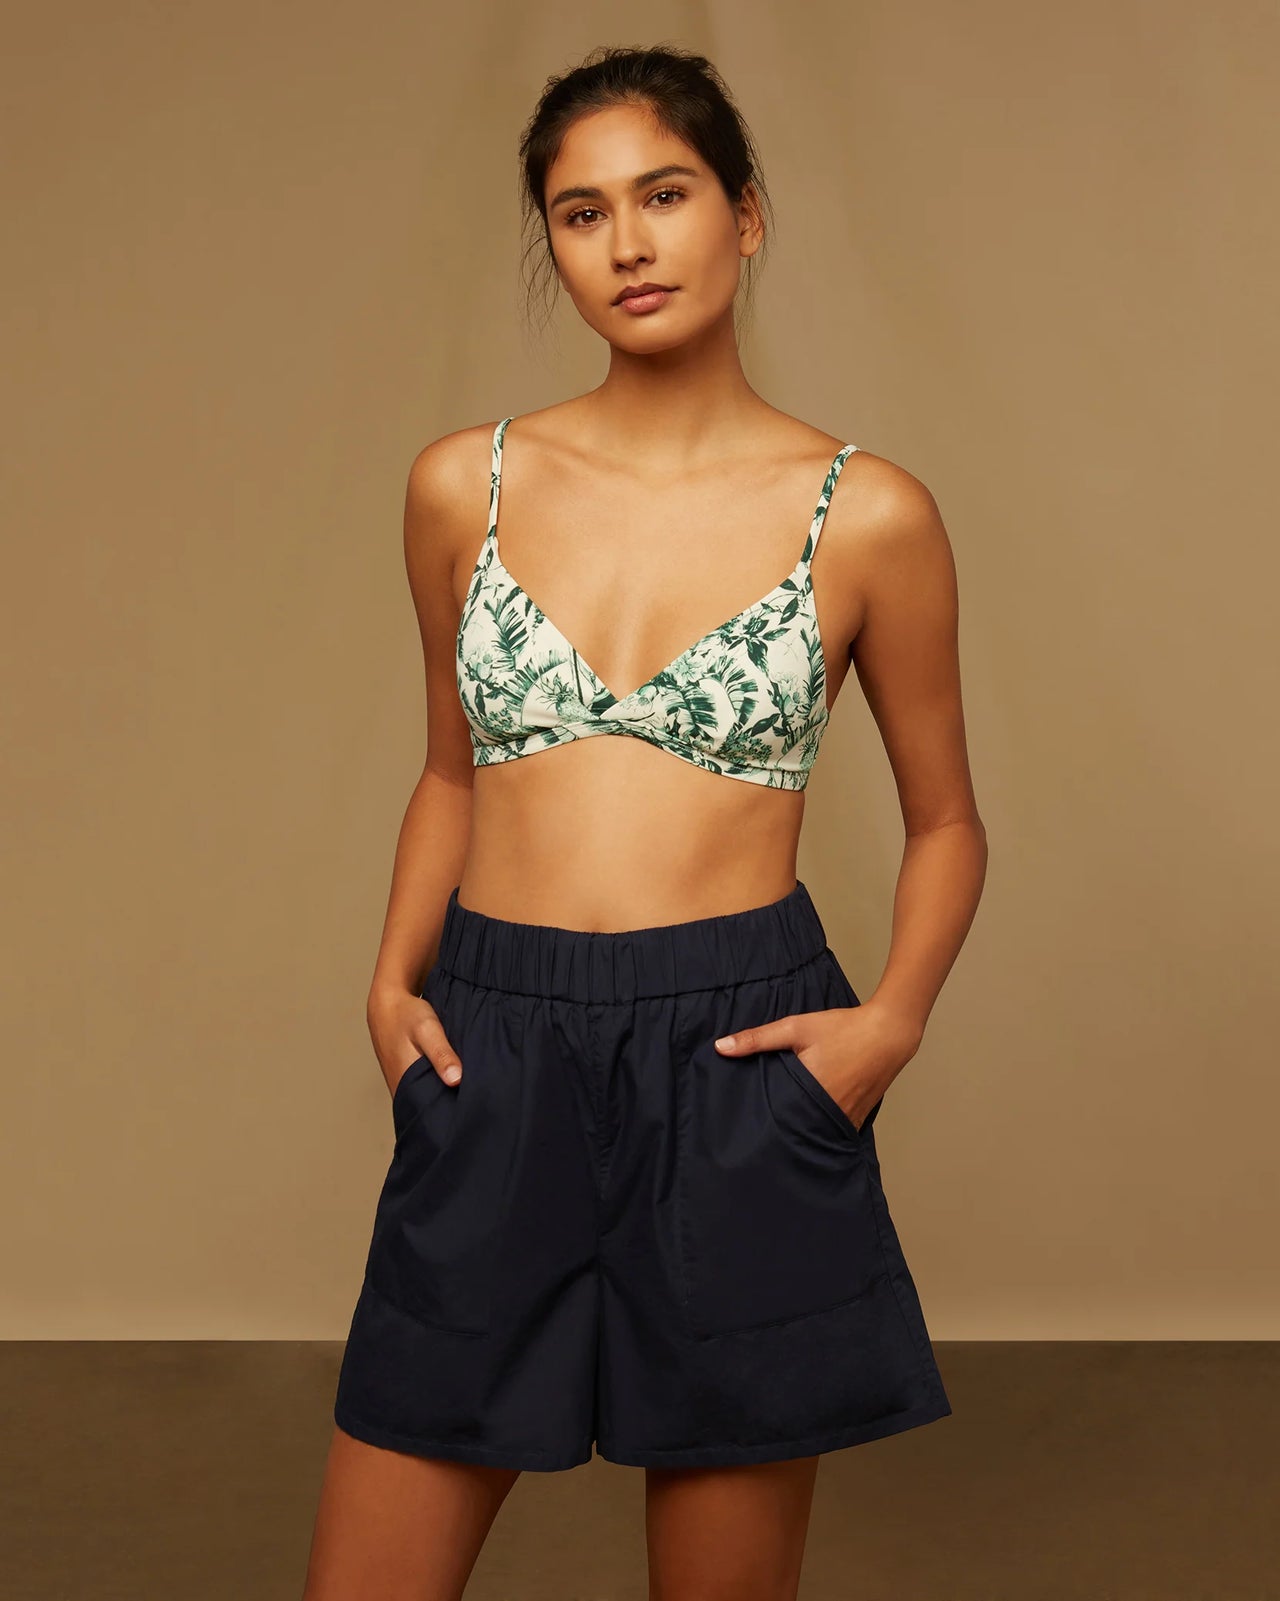 Malin Green Bikini Top, Swim by Onia | LIT Boutique